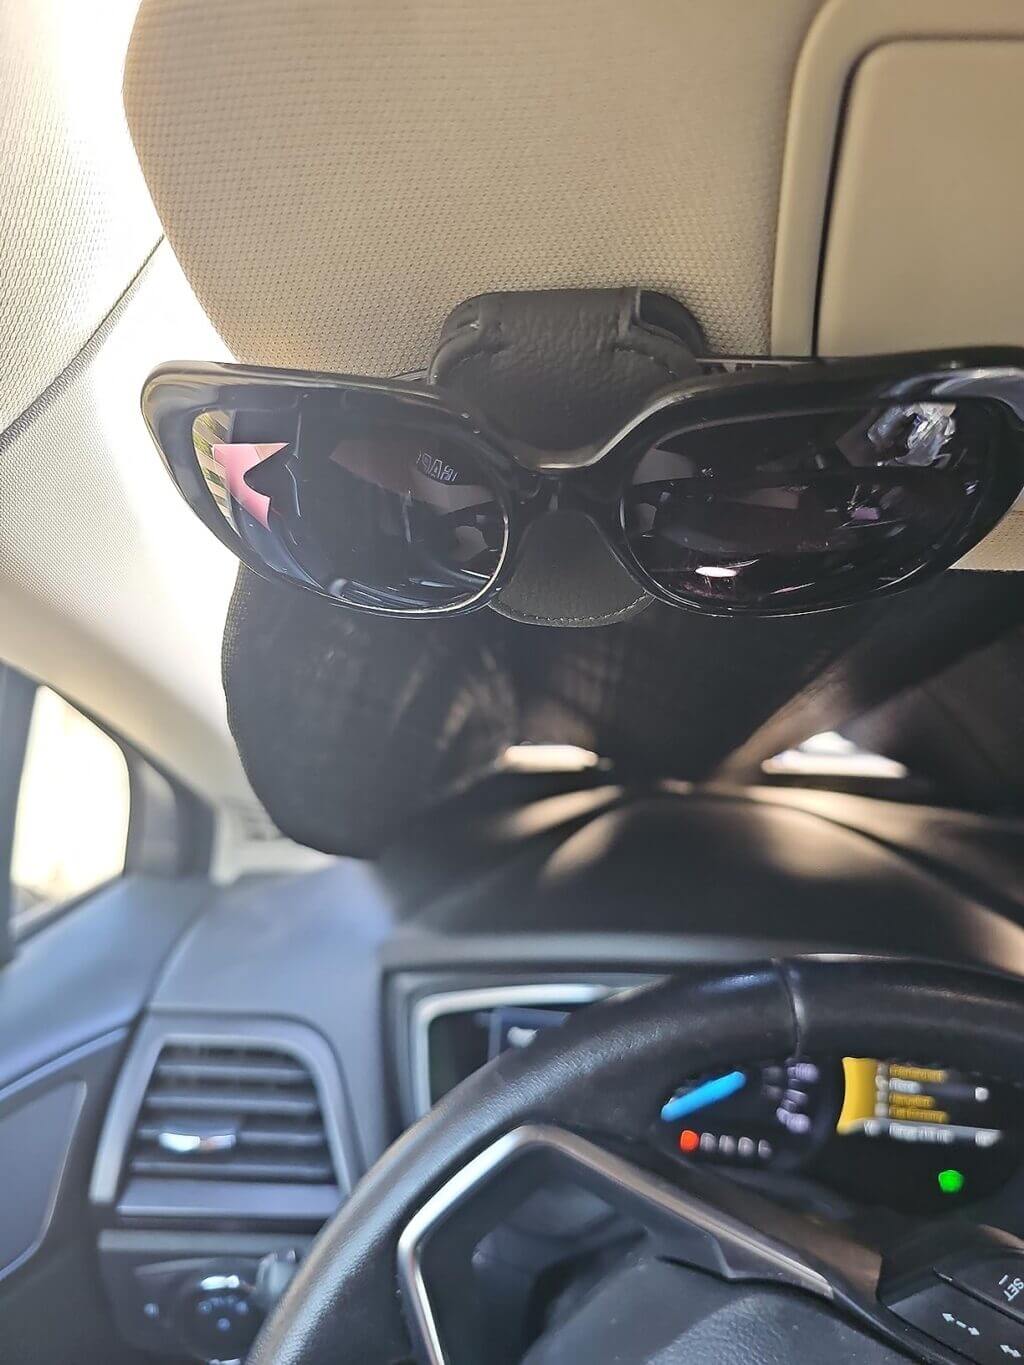 KIWEN Sunglasses Holders by Amazon